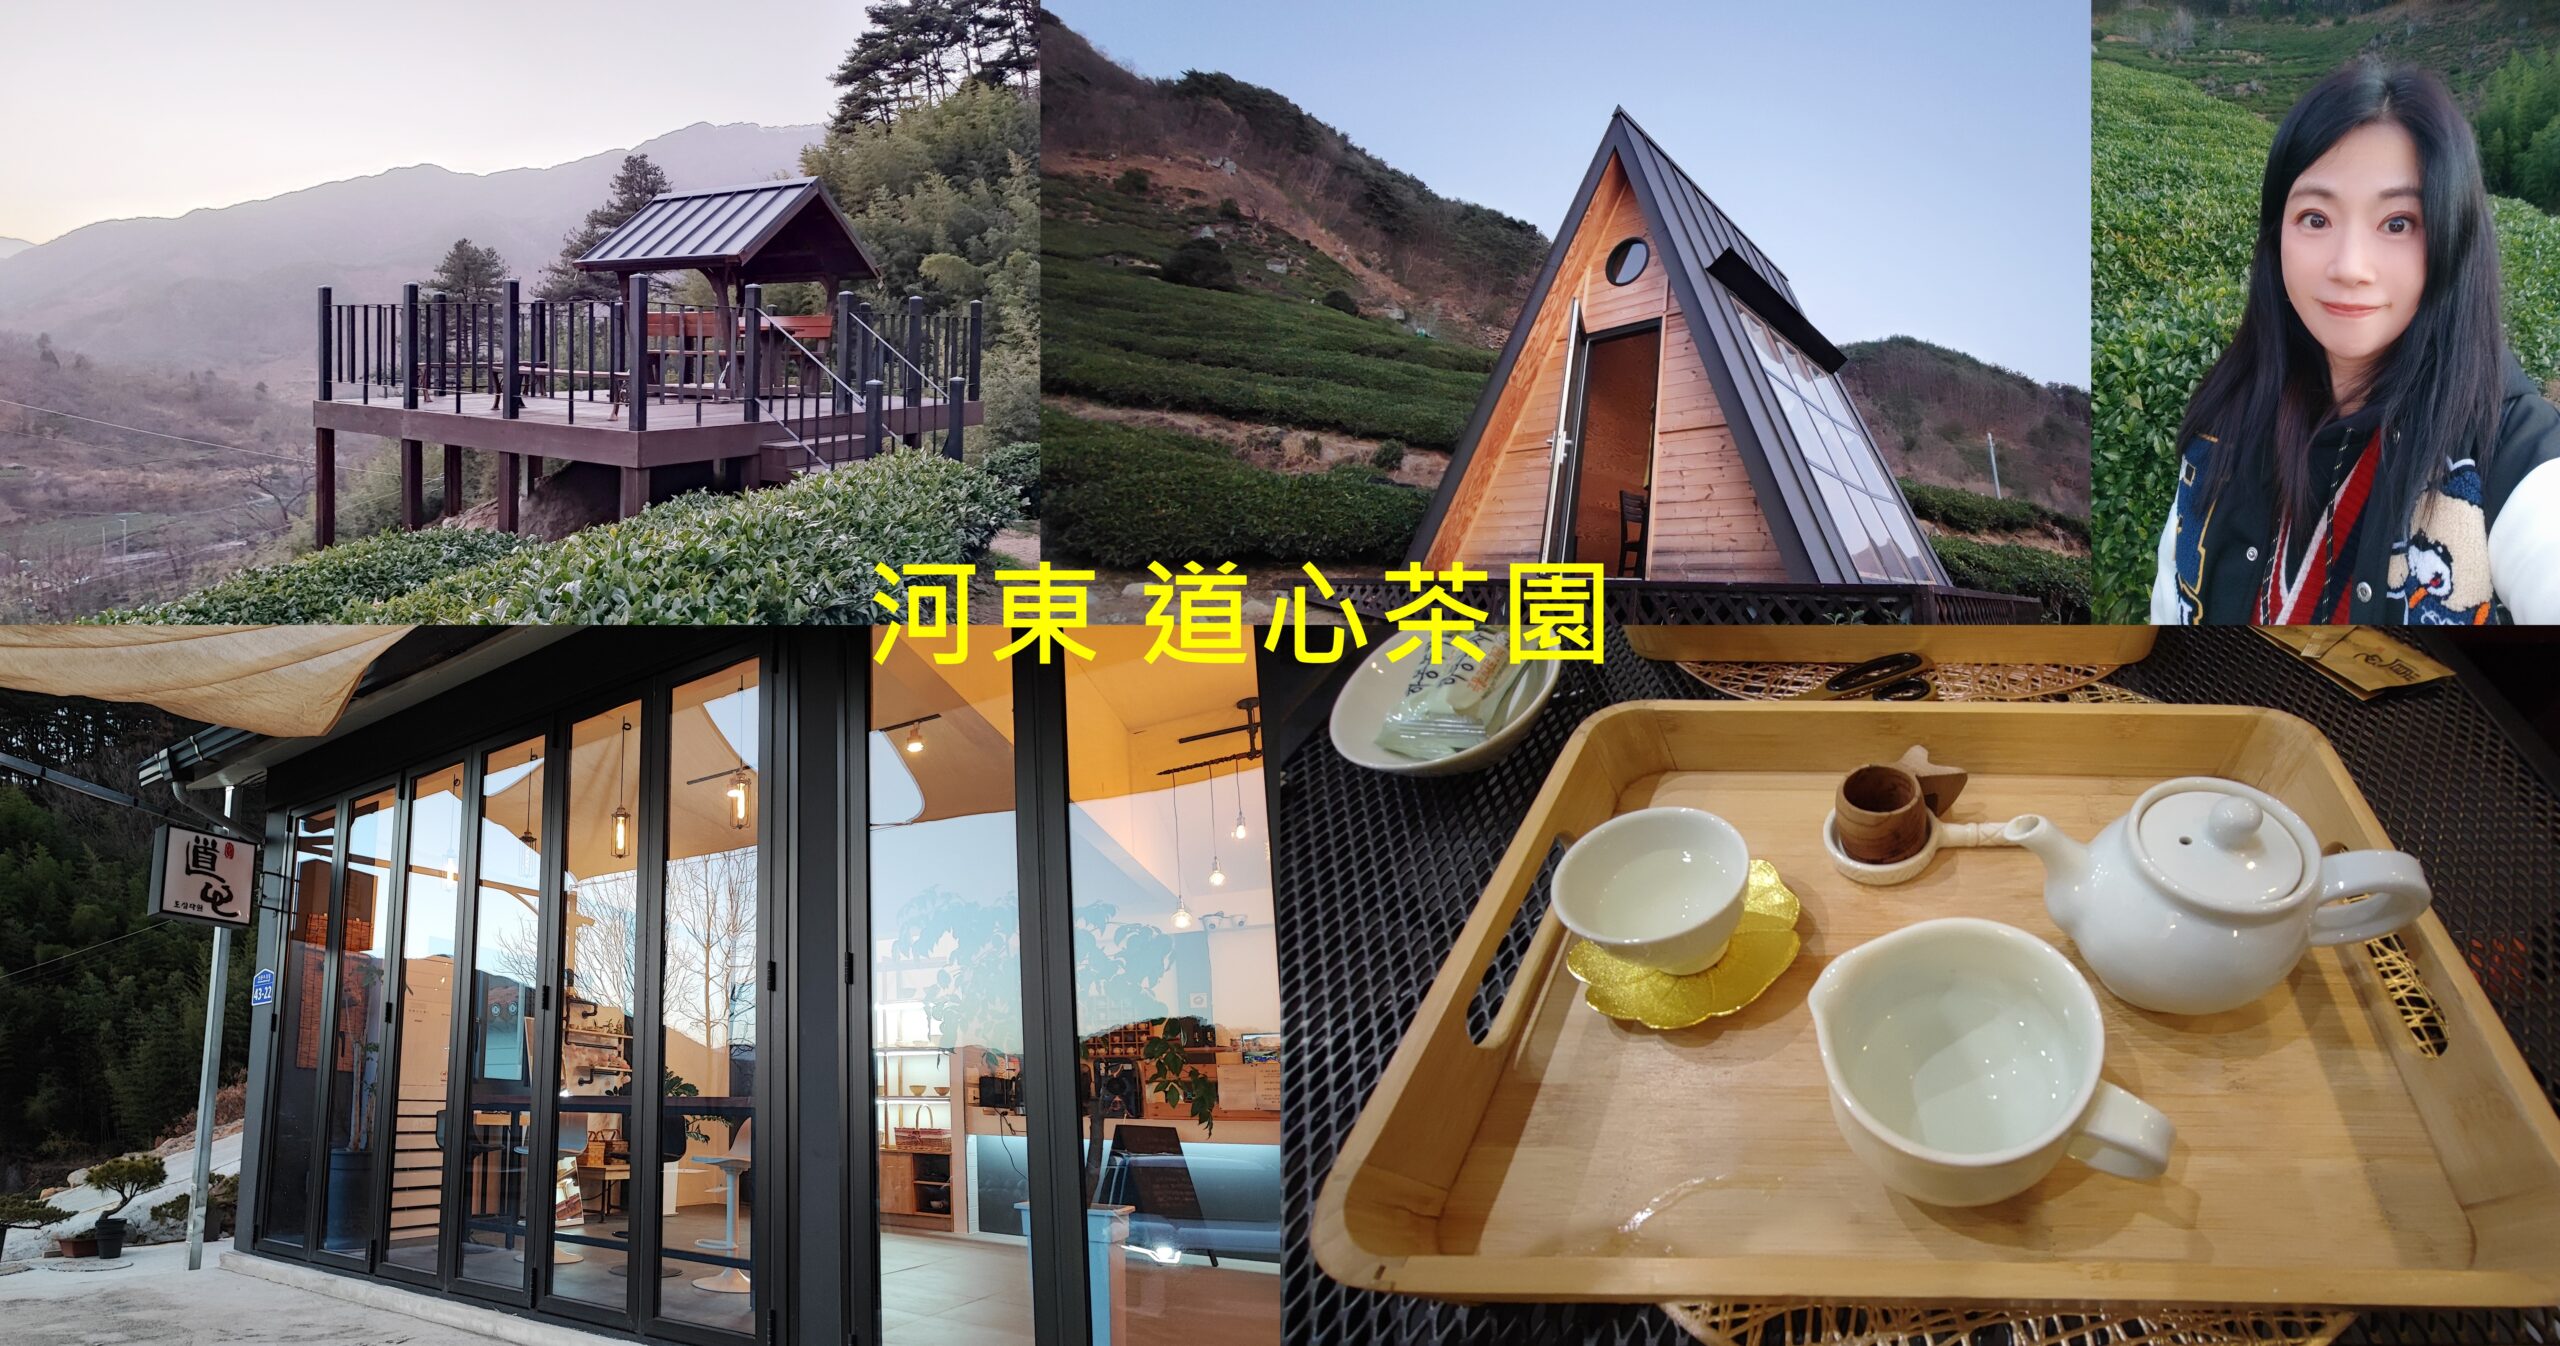 Gyeongsang-nam do,年輕人喜歡來拍照的茶園,慶尚南道,河東郡,細雀綠茶,道心茶園(도심다원),雨前綠茶,韓國旅遊,韓國綠茶